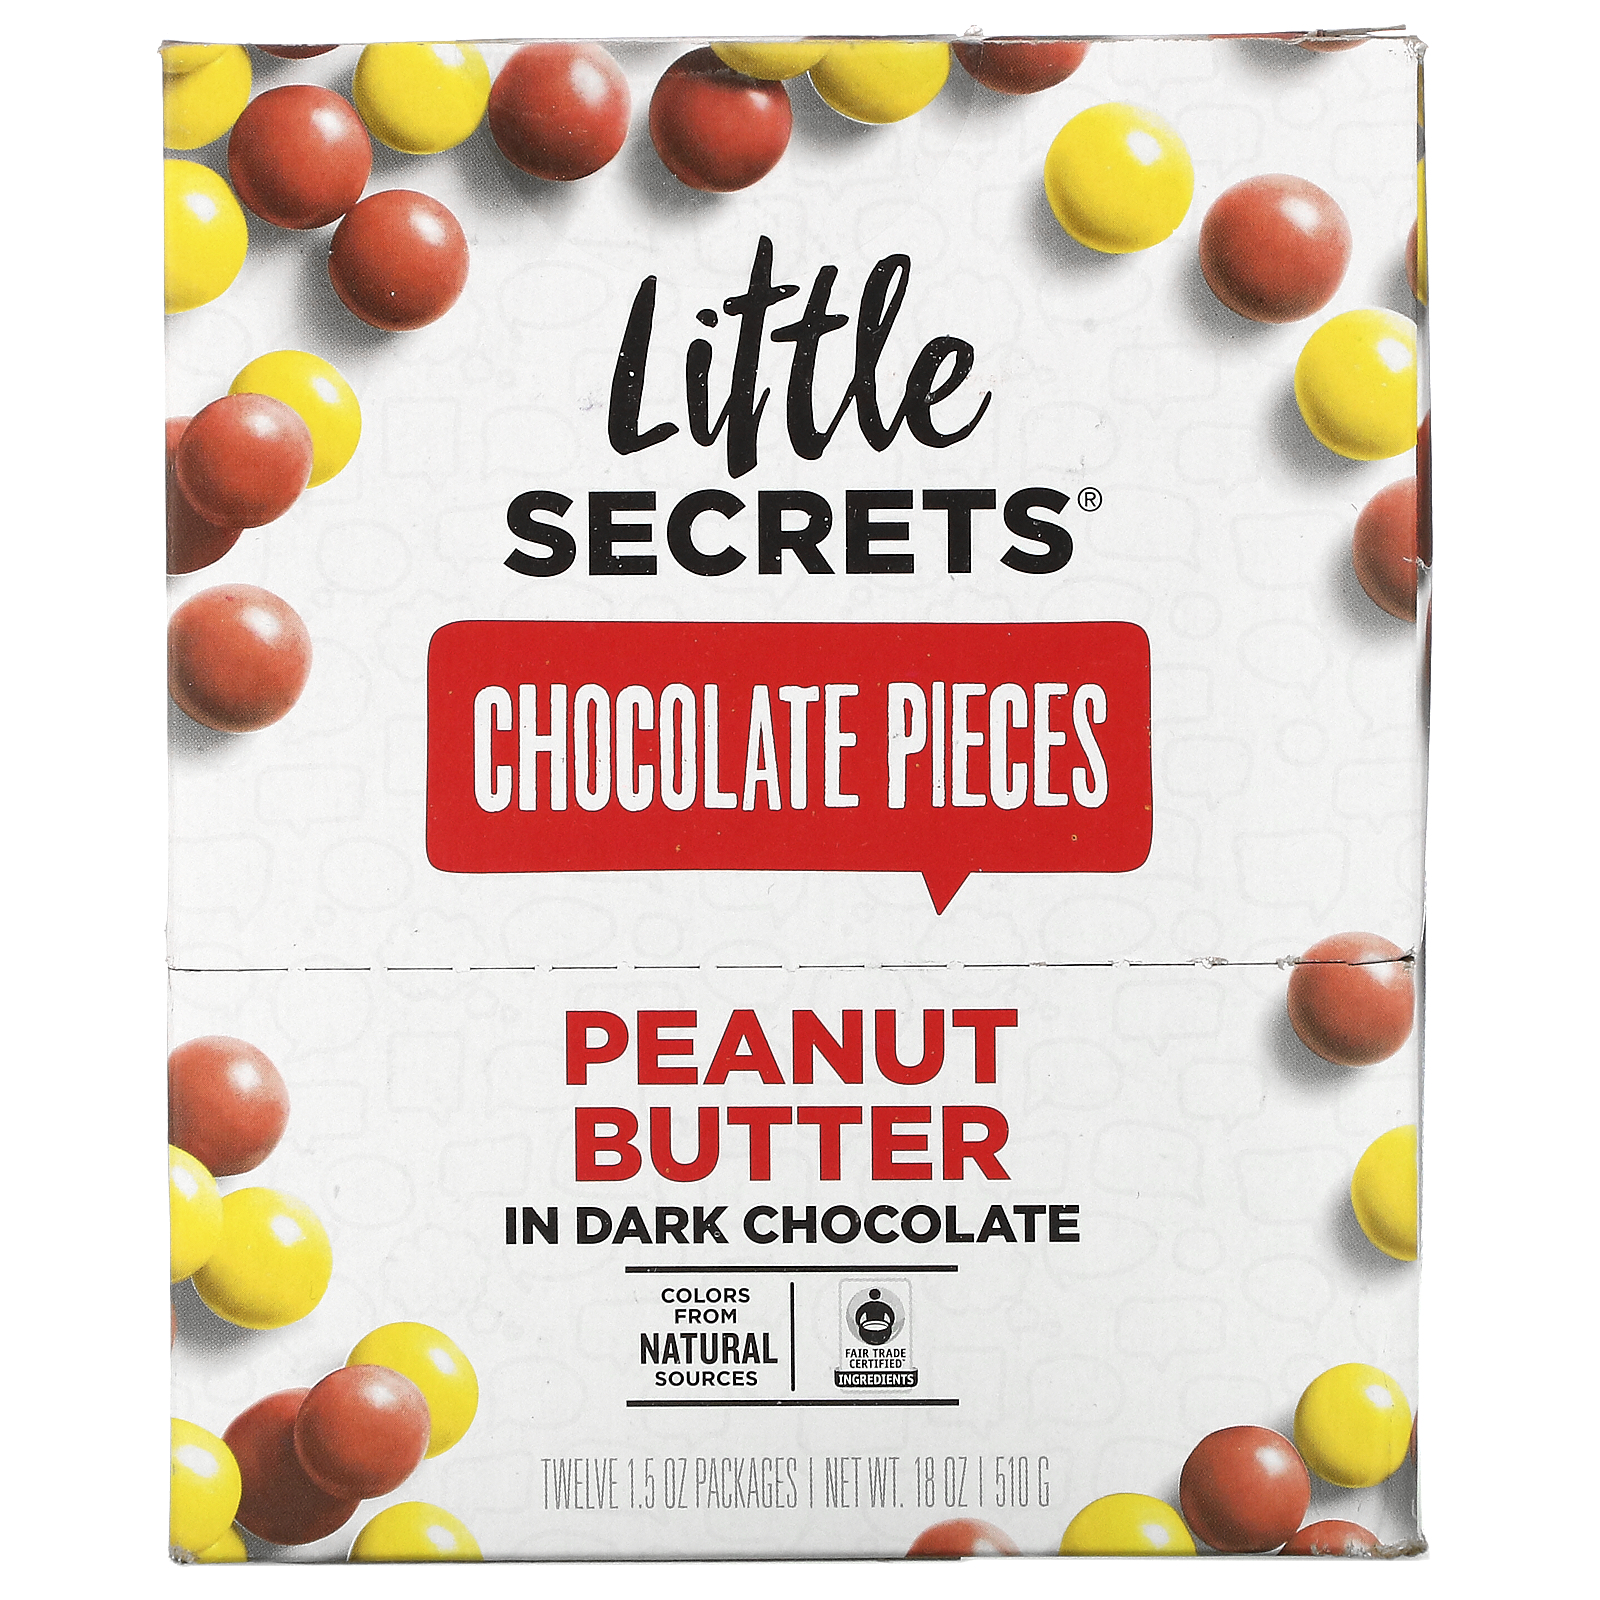 Little Secrets Dark Chocolate Pieces, Peanut Butter, 12 Pack, 1.5 oz (42.5 g) Each - image 1 of 2